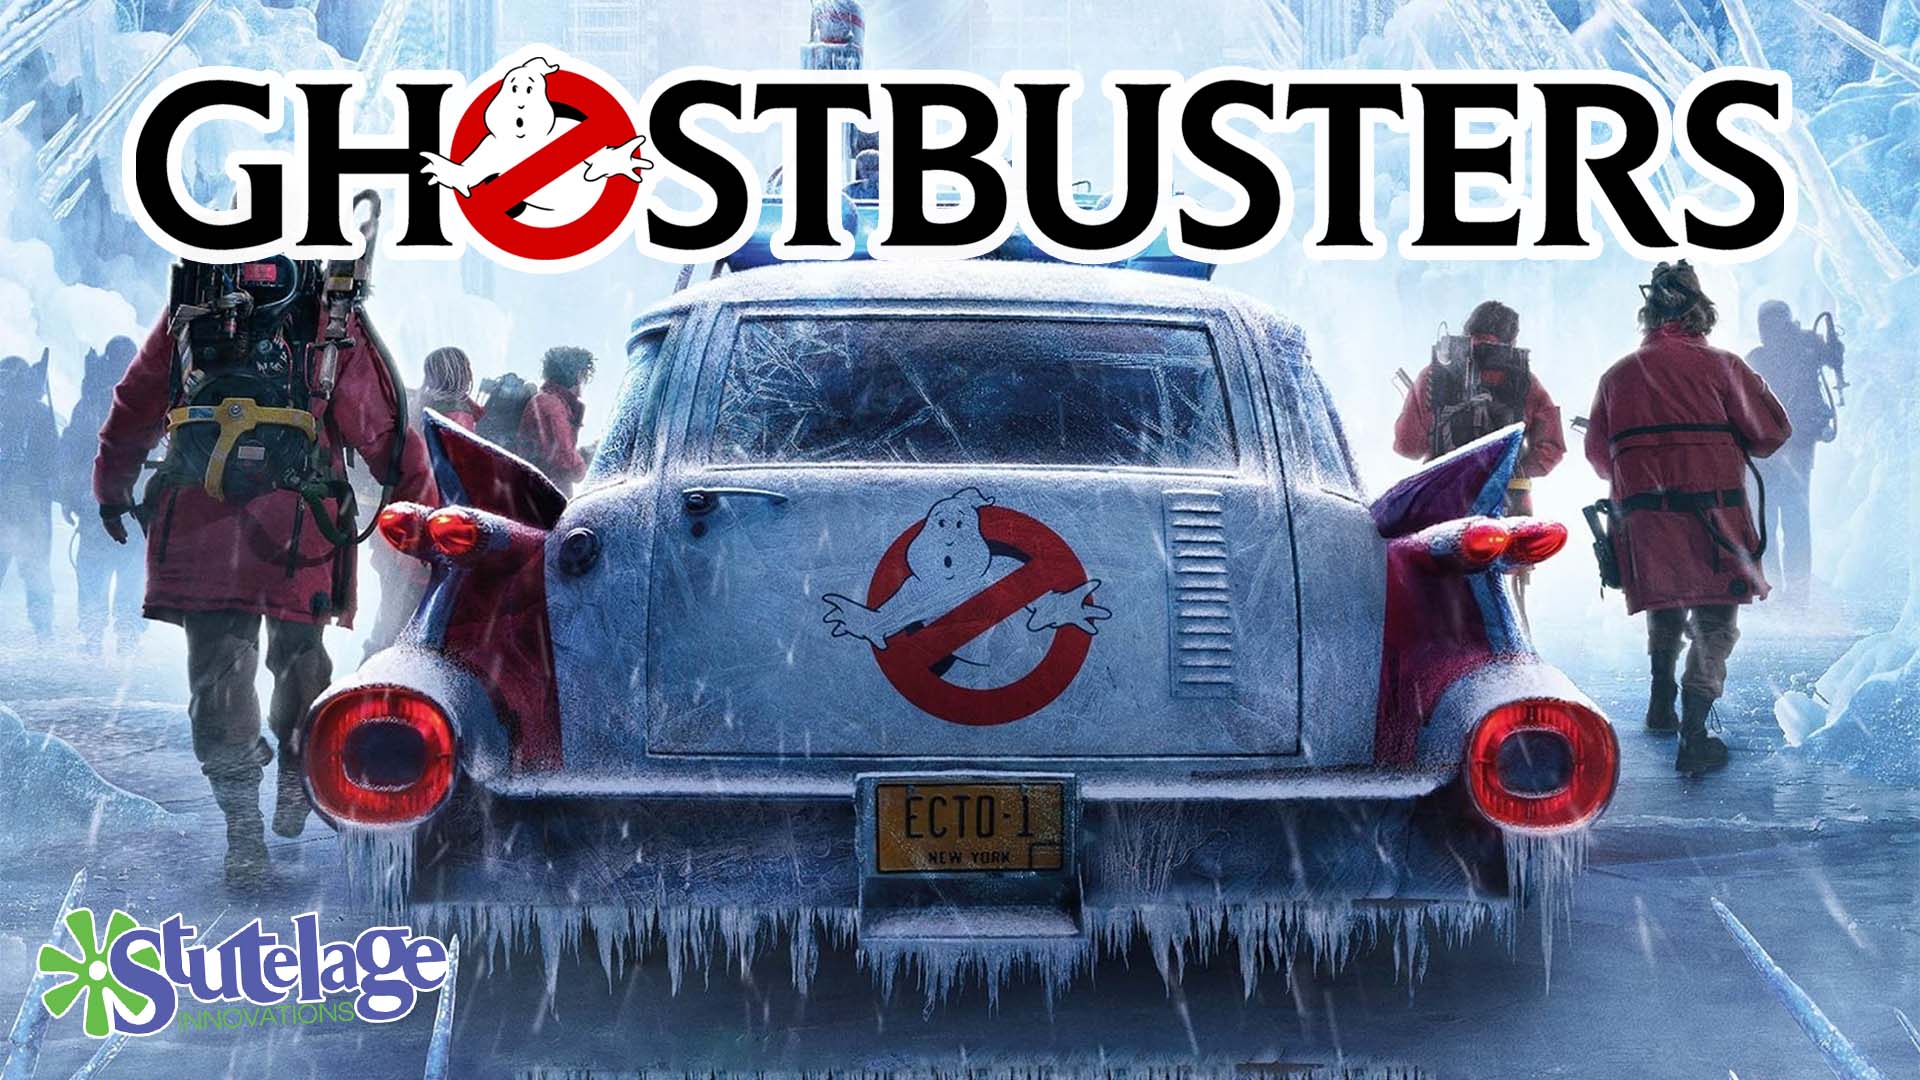 Ghostbusters Website